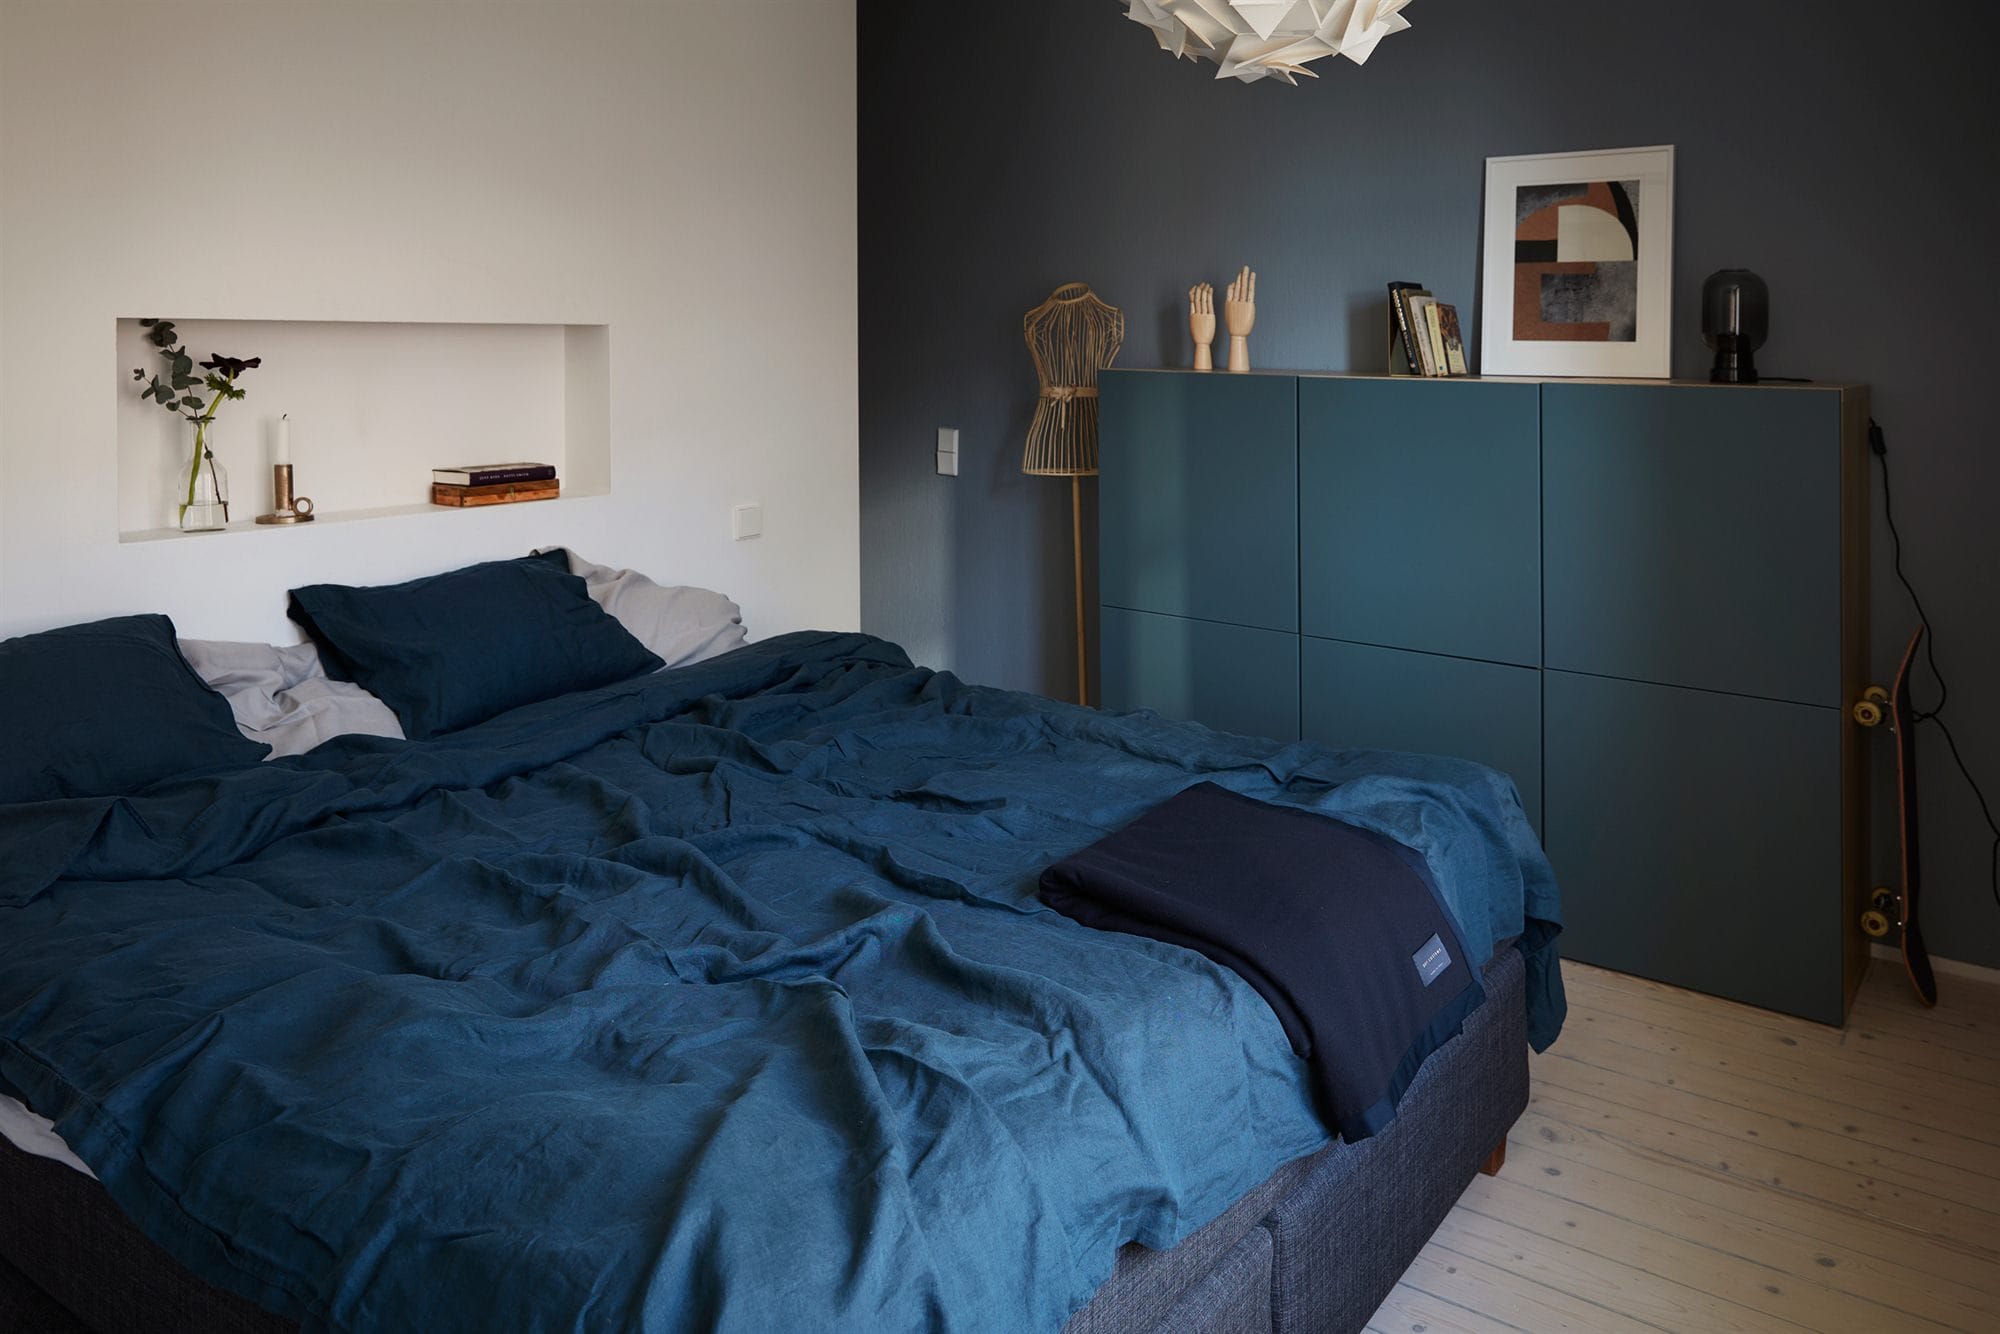 Bedroom in blue - via Coco Lapine Design